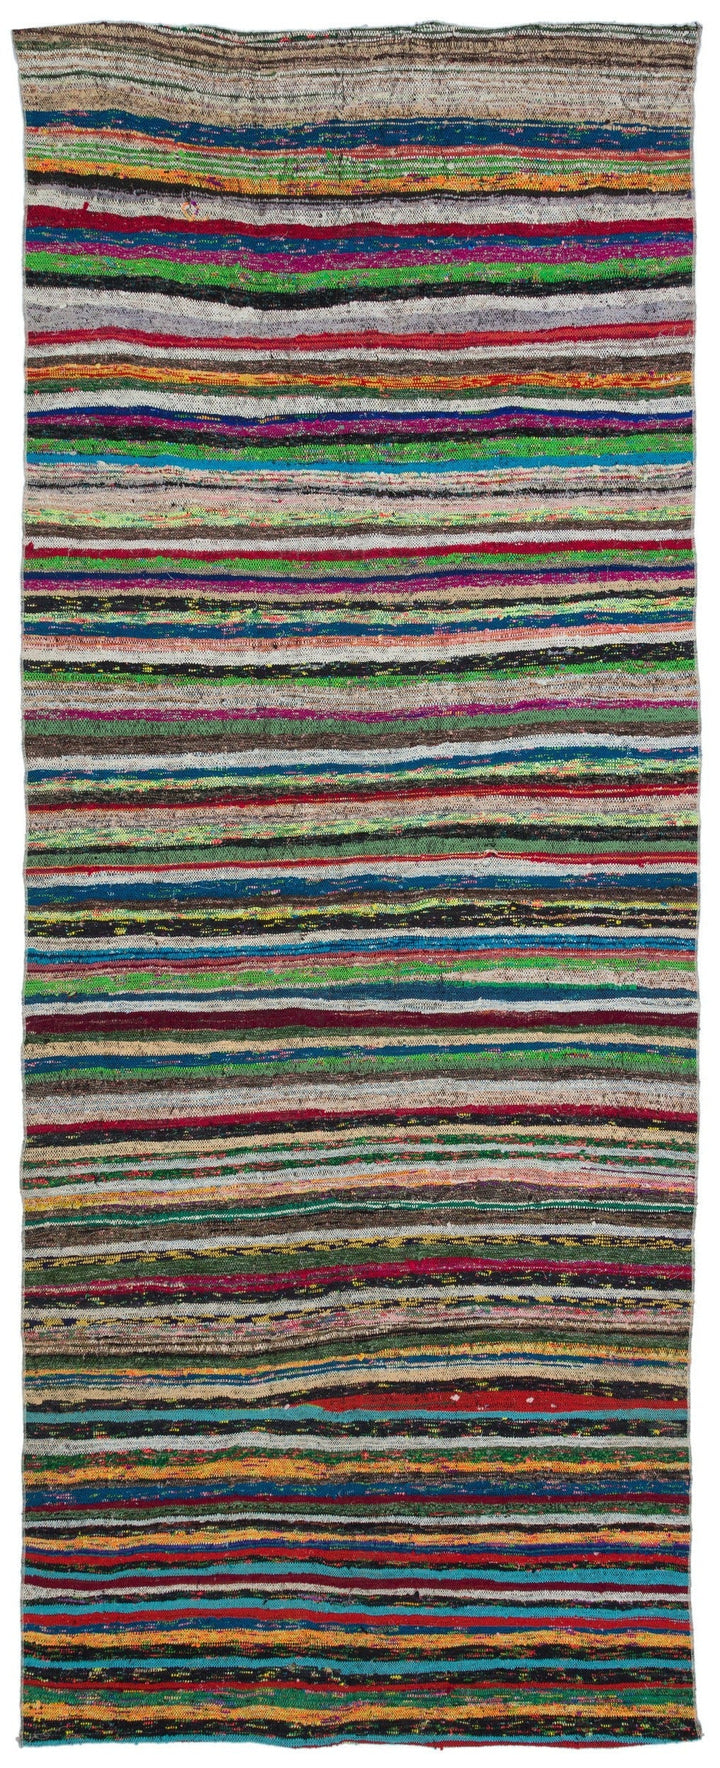 Cretan Beige Striped Wool Hand-Woven Carpet 148 x 364